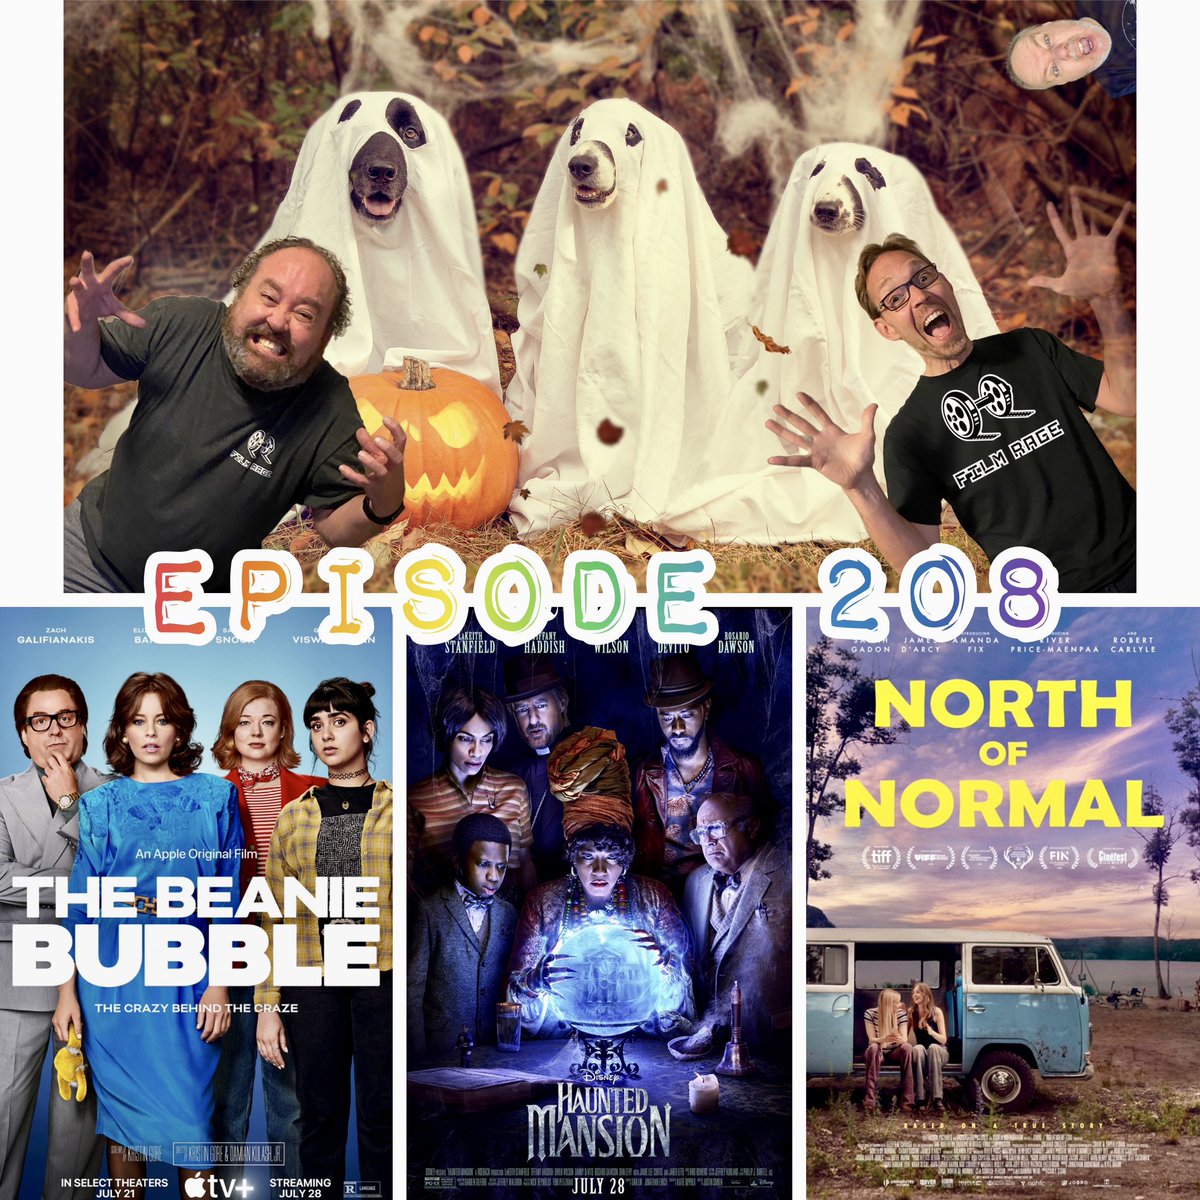 Ep 208 is #streaming  #podcast

This week
#hauntedmansion #thebeaniebubble #northofnormal #thespitfiregrill #ellenburstyn #willpatton 

😍👇
buymeacoffee.com/Filmrageyyc

🤬 👇
 filmrageyyc.com 

Sponsor @CMCinemas 

👇 @Podbreed 
podbreed.com

#FilmTwitter